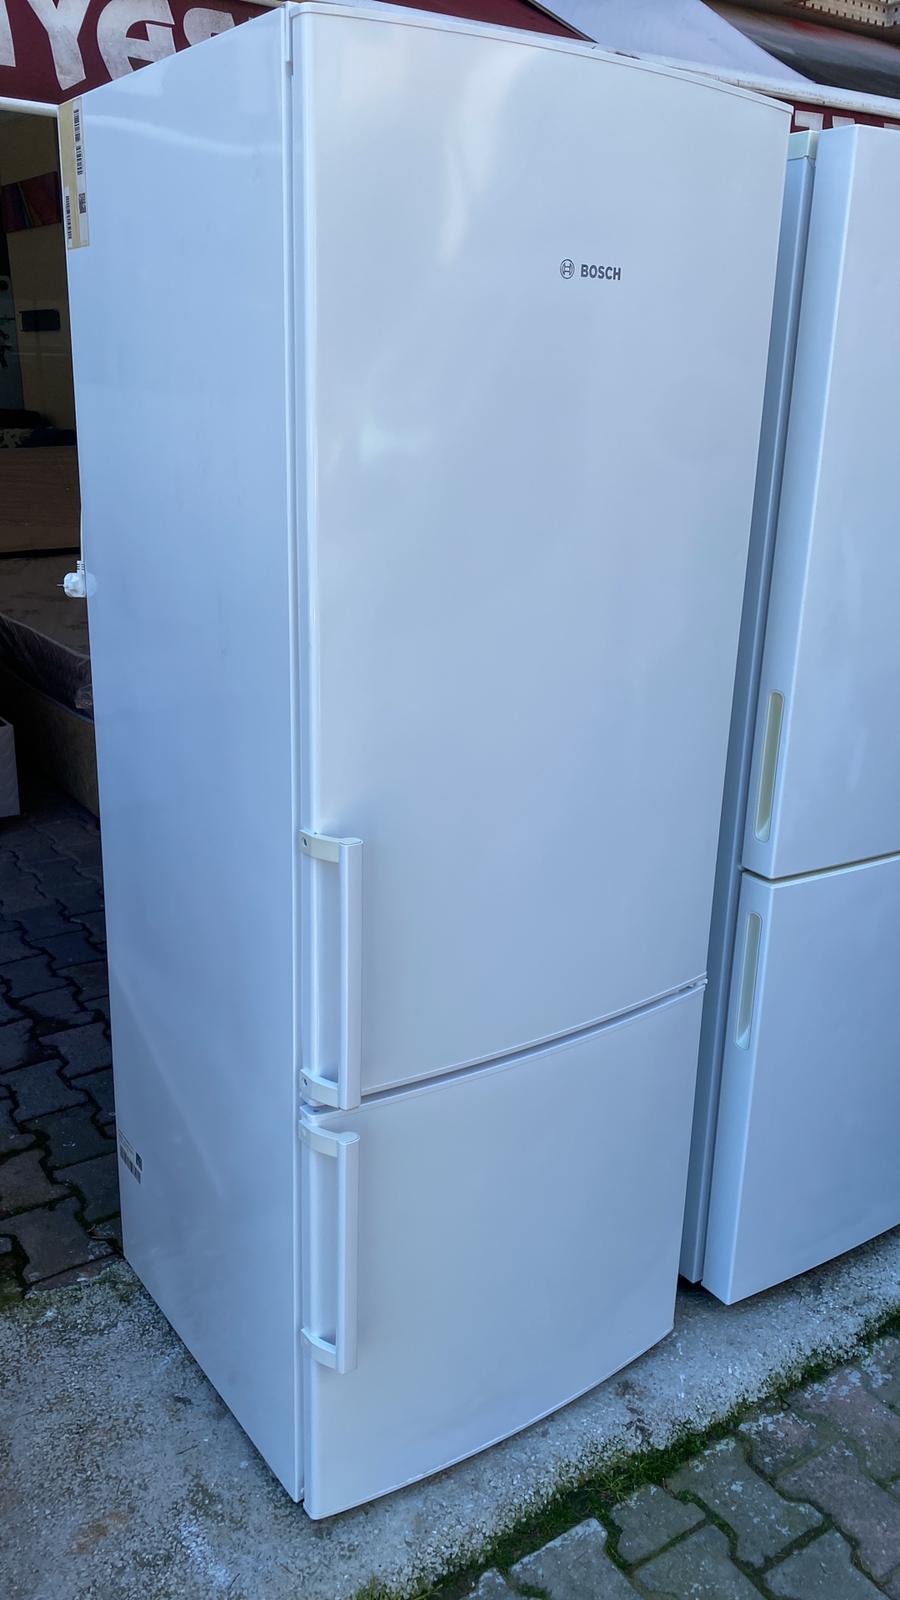 İkinci El Bosh Buzdolabı-KGN57VW20N (4)